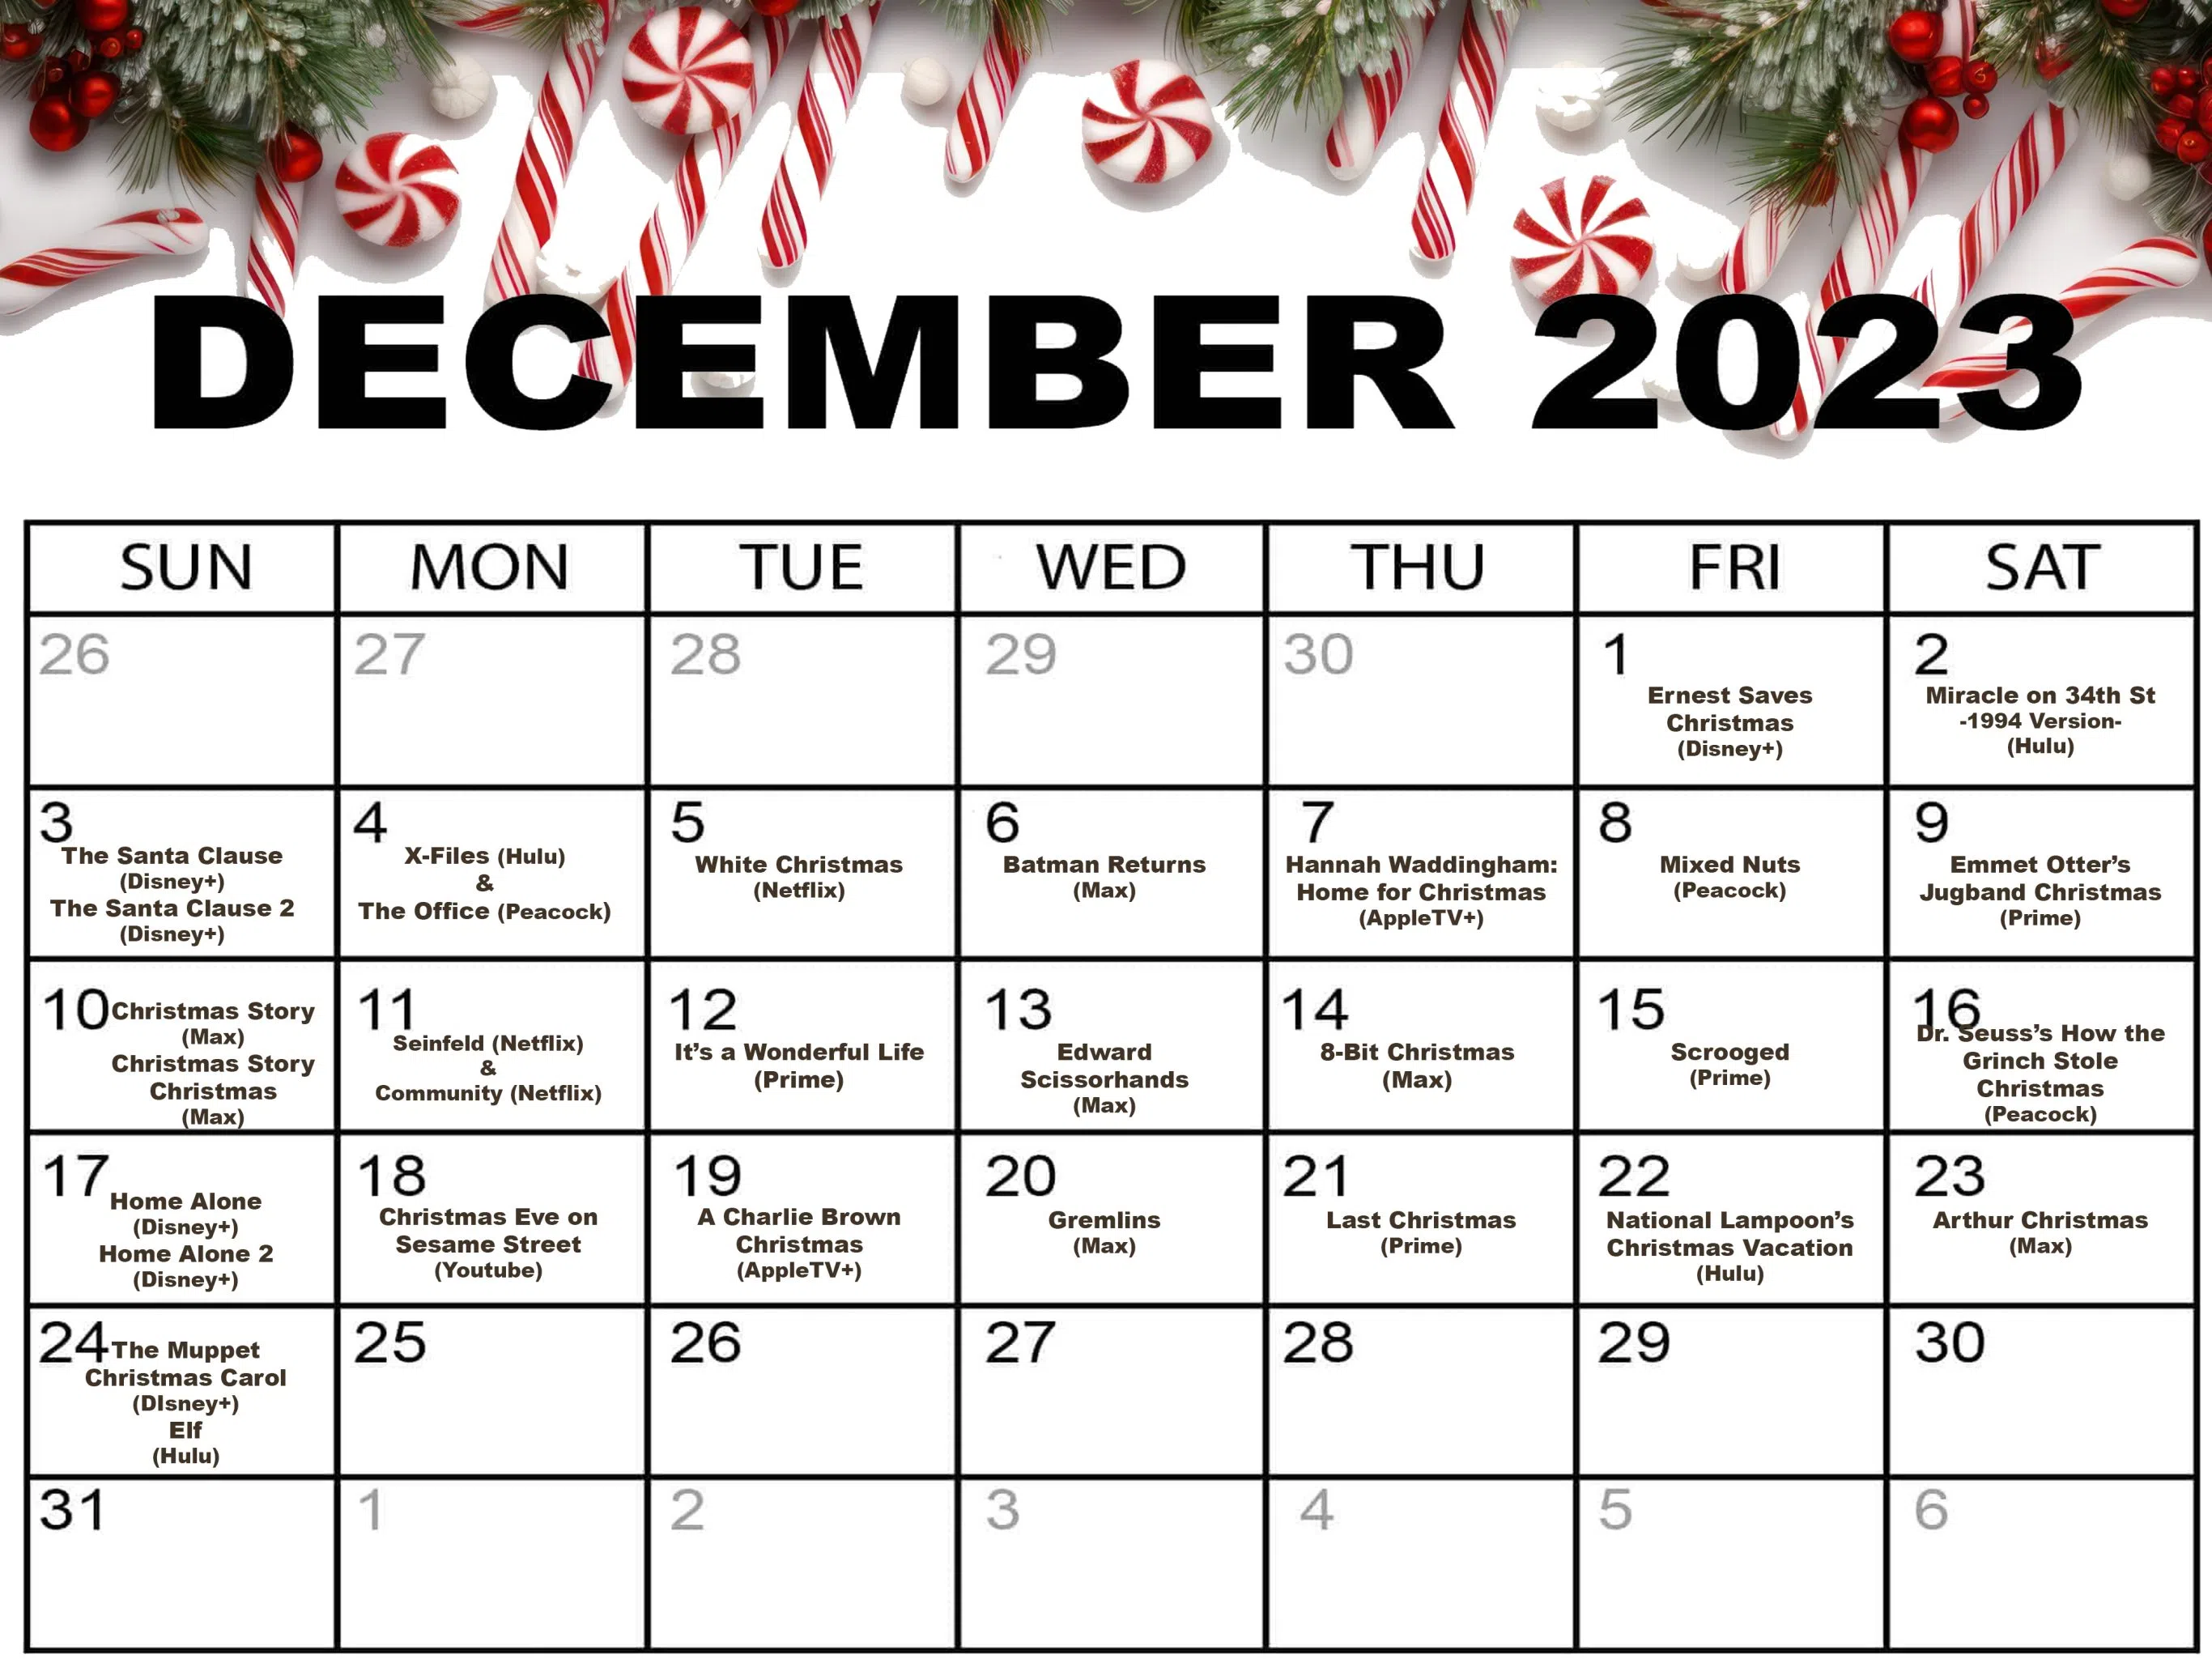 2023 Christmas Watch Calendar The Mighty 790 KFGO KFGO